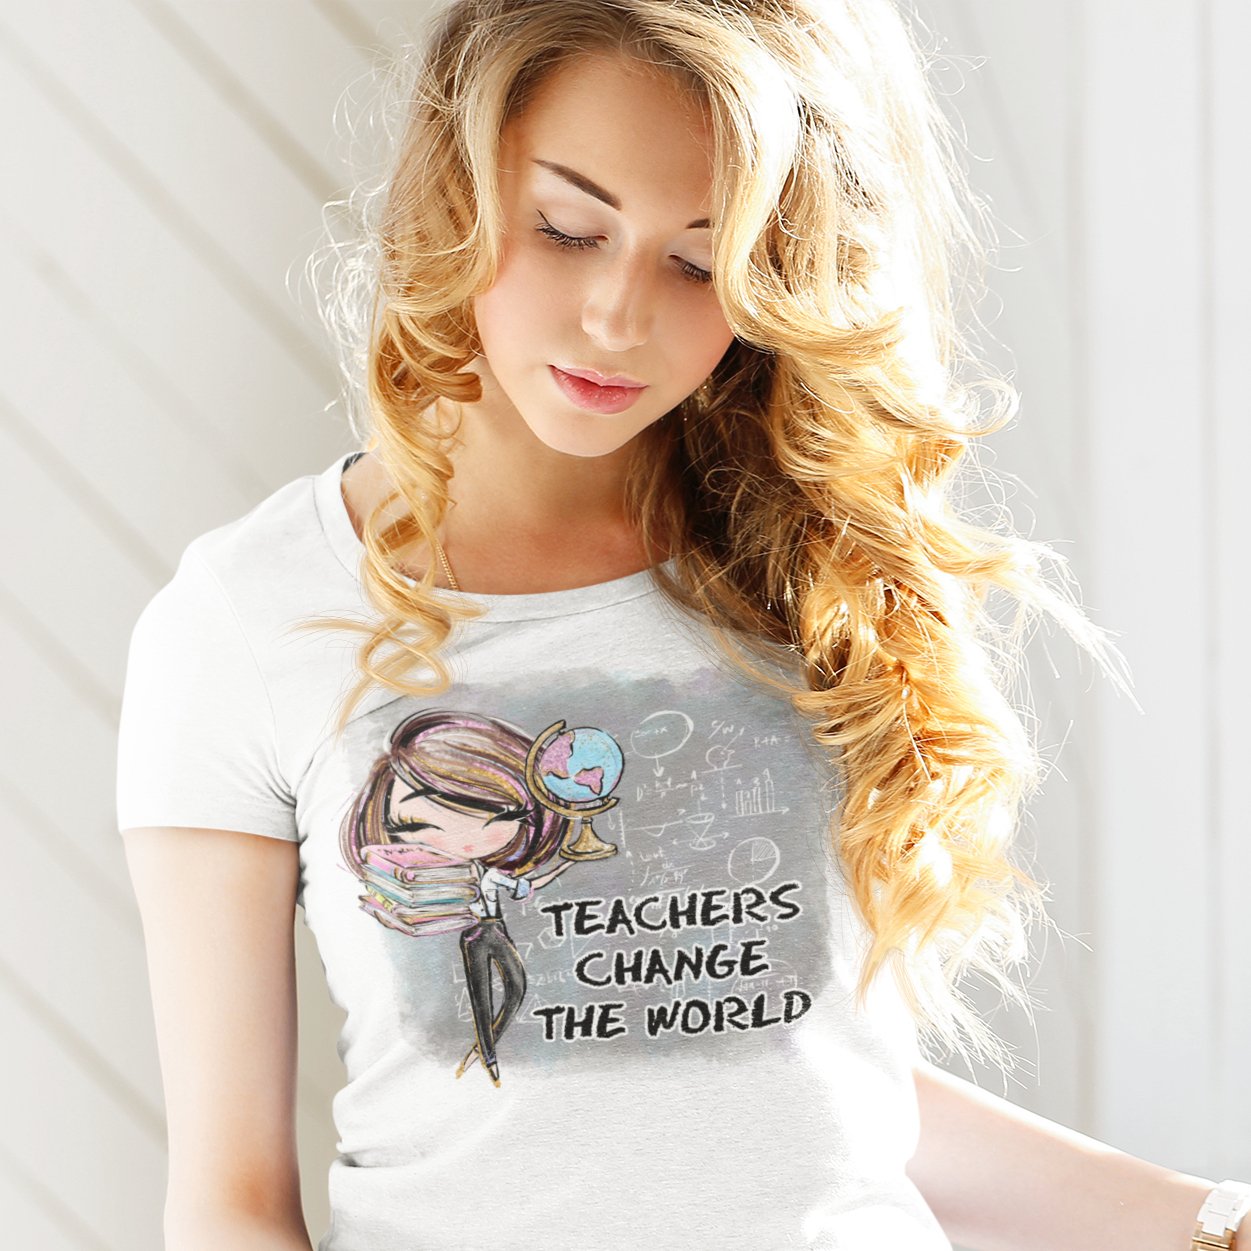 Teachers Change the World: Appreciation T-shirt – Where Impact Meets Comfort!